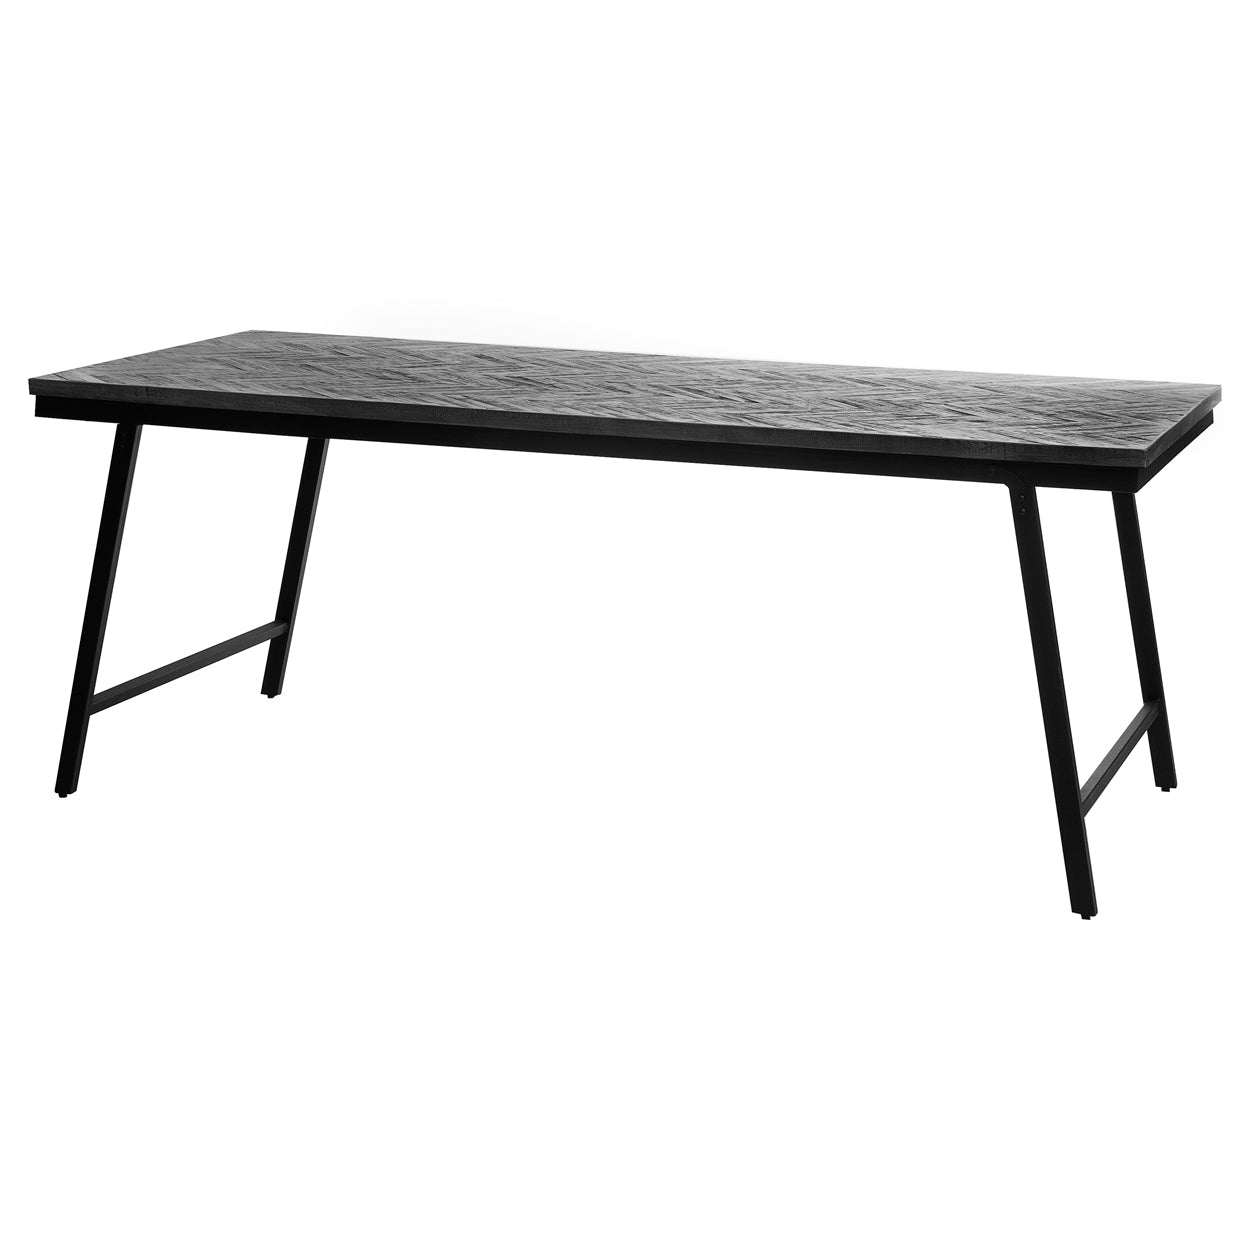 THE HERRINGBONE Market Table - Black - 200 cm half-front view